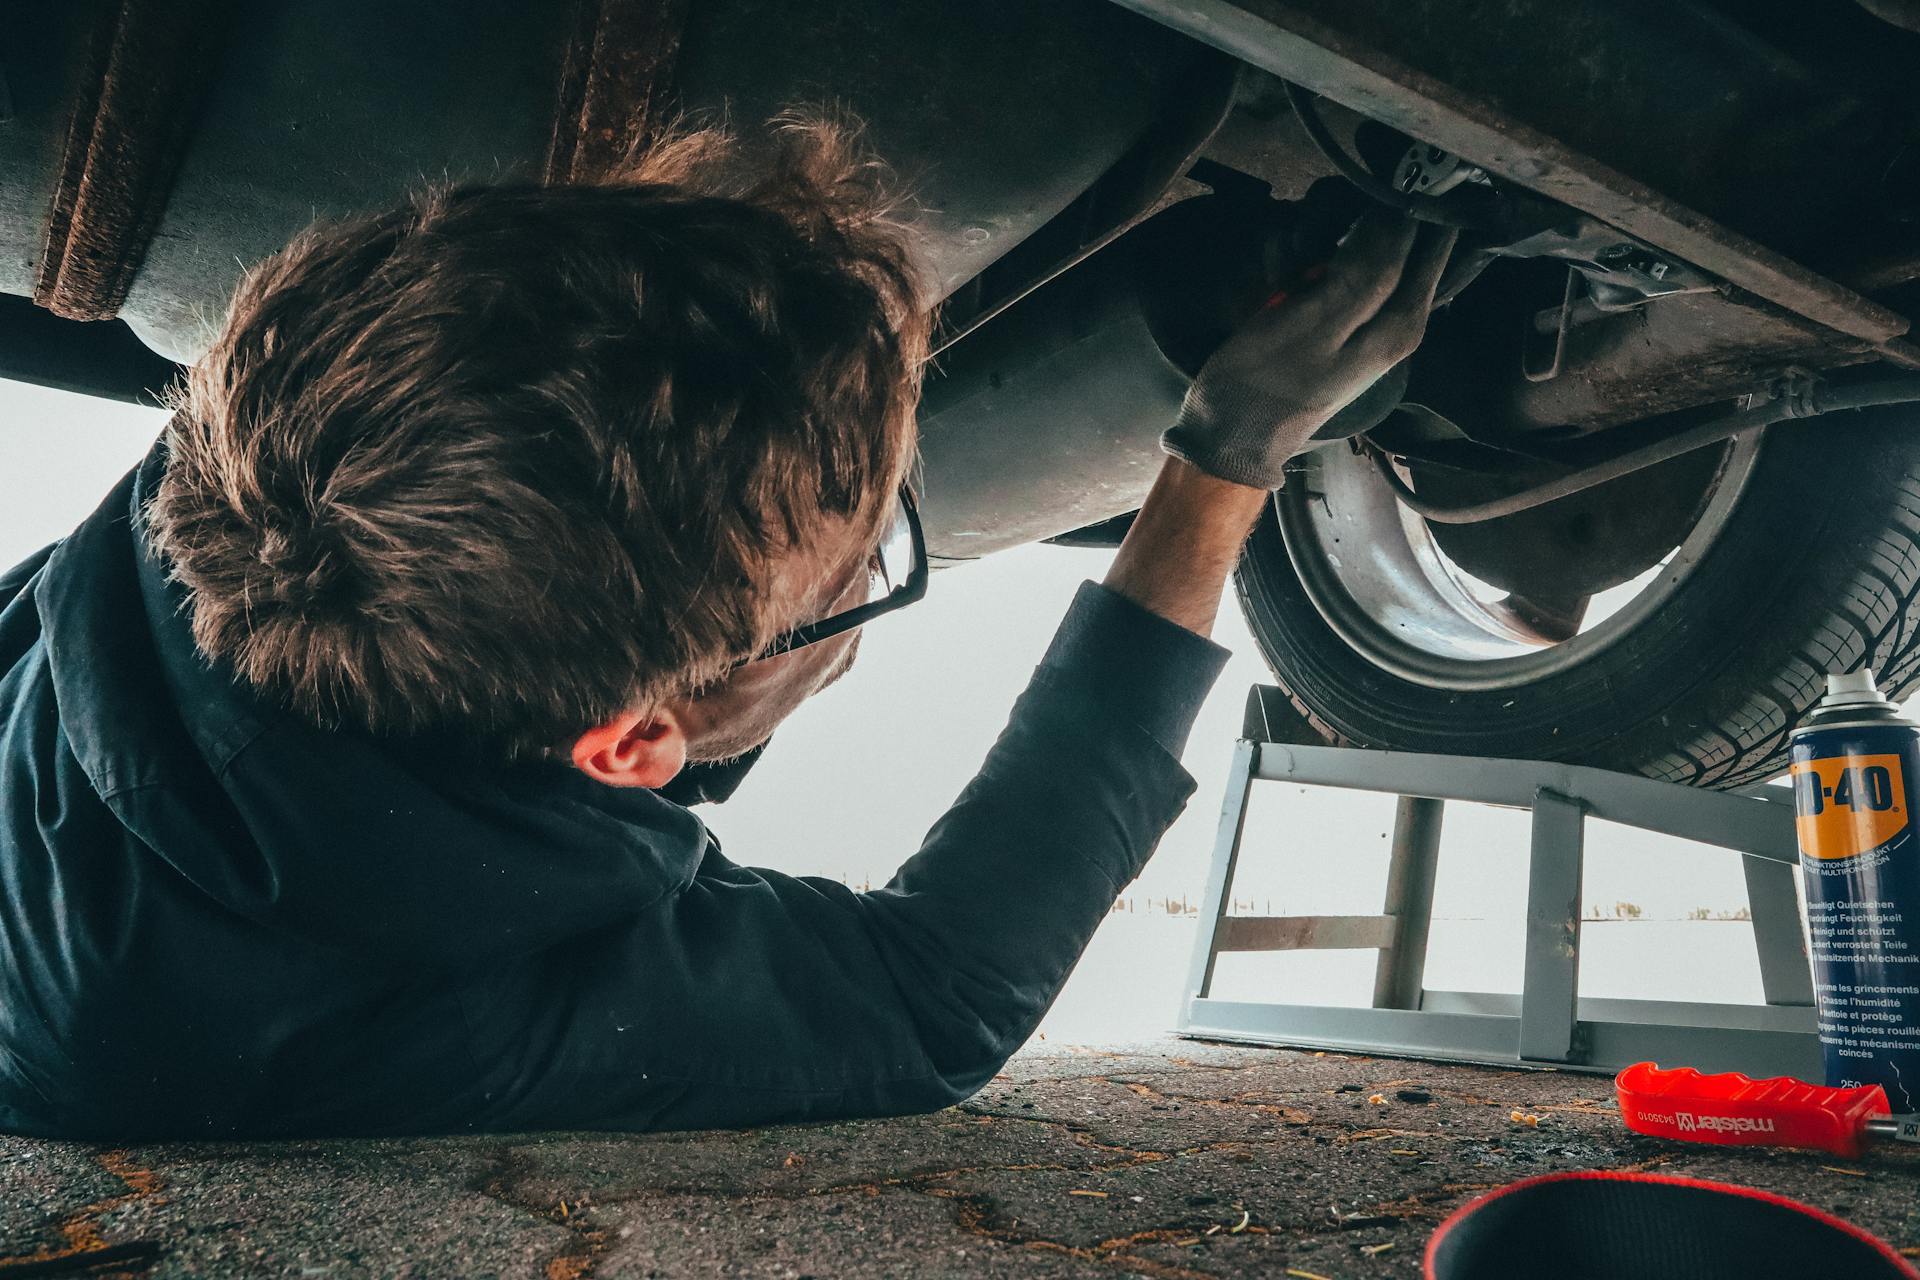 A mechanic fixing a vehicle engine | Source: Pexels